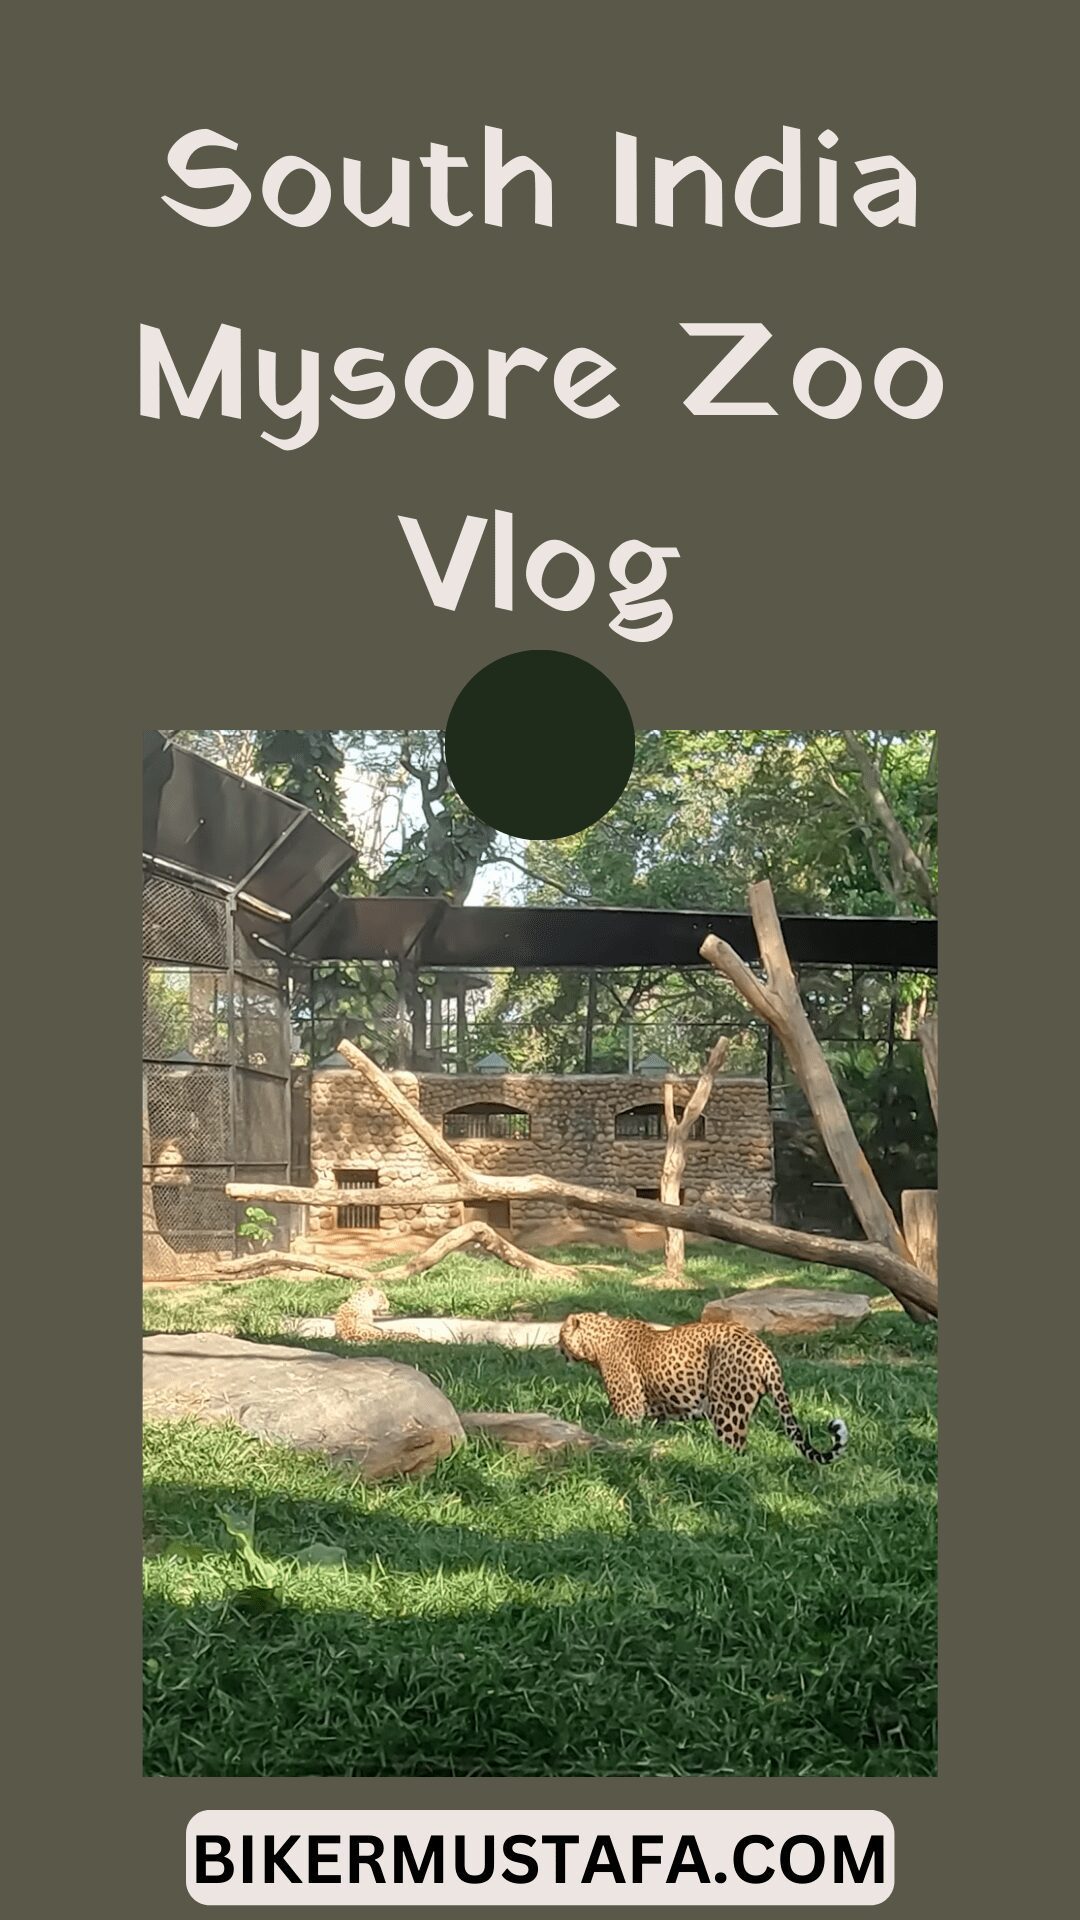 South India Mysore Zoo Vlog